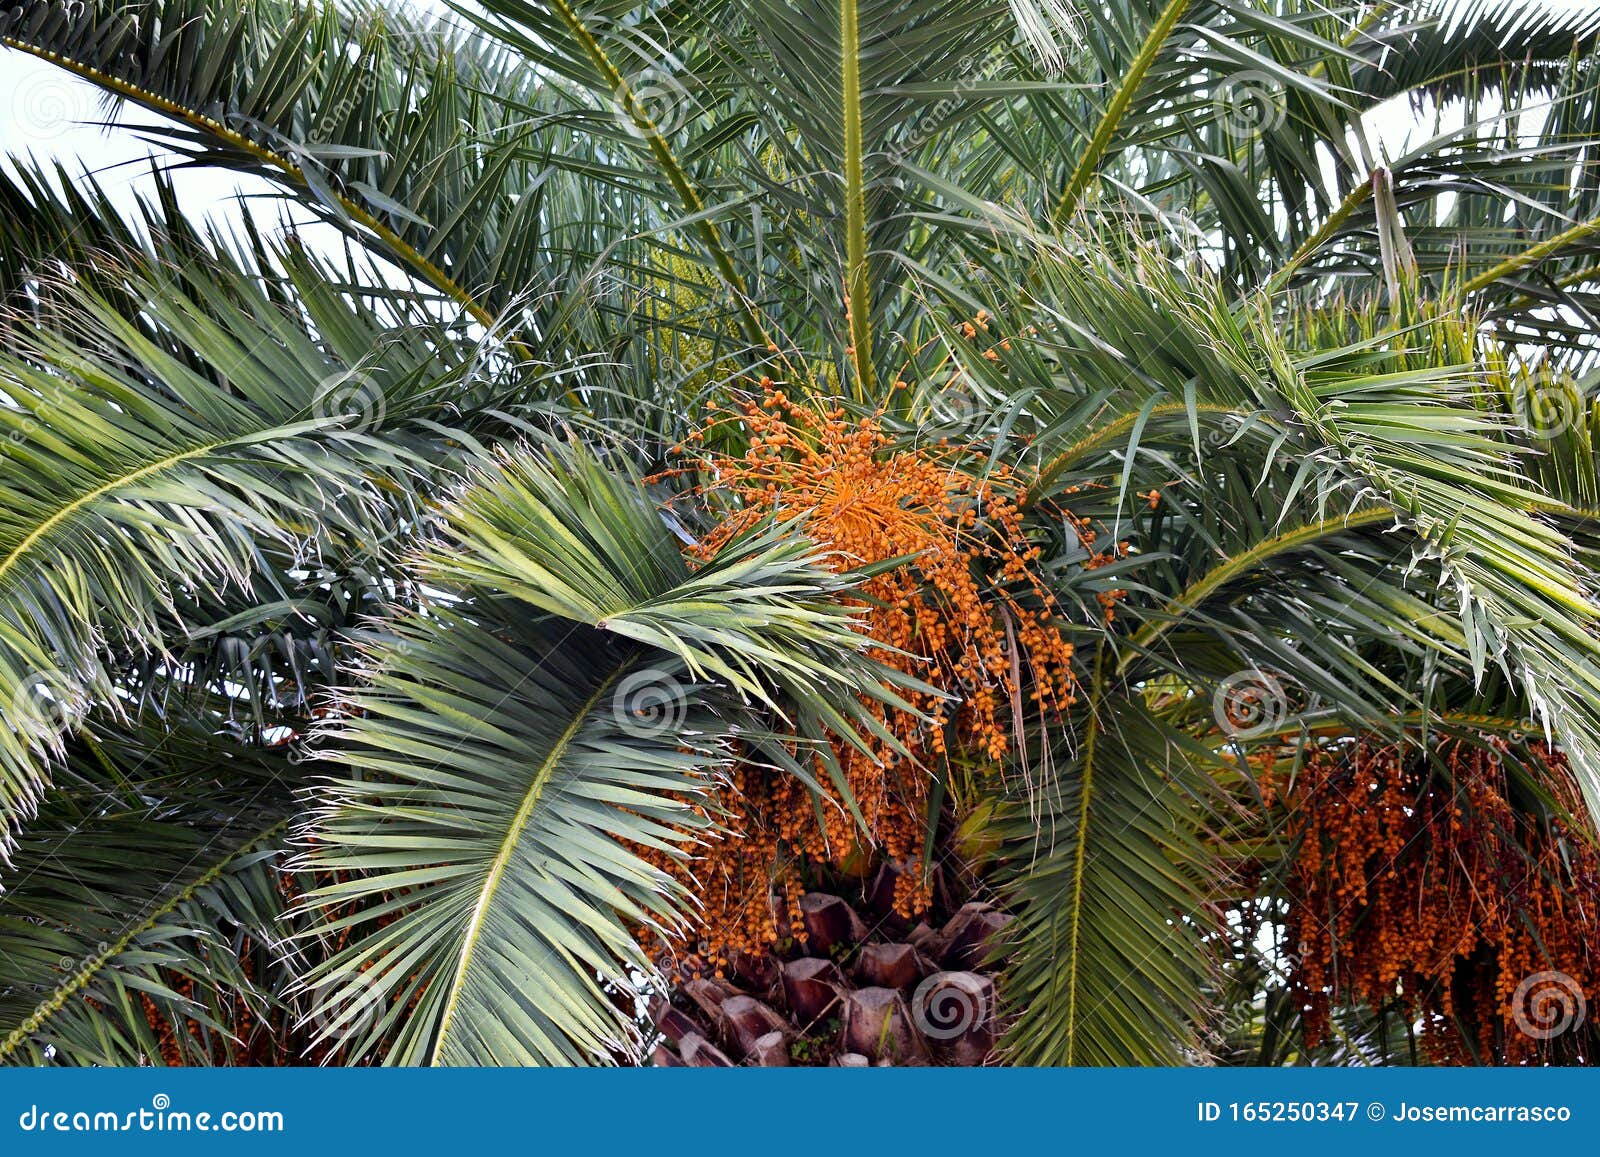 palm tree with dates on the beach of covas in viveiro, lugo, galicia. spain.